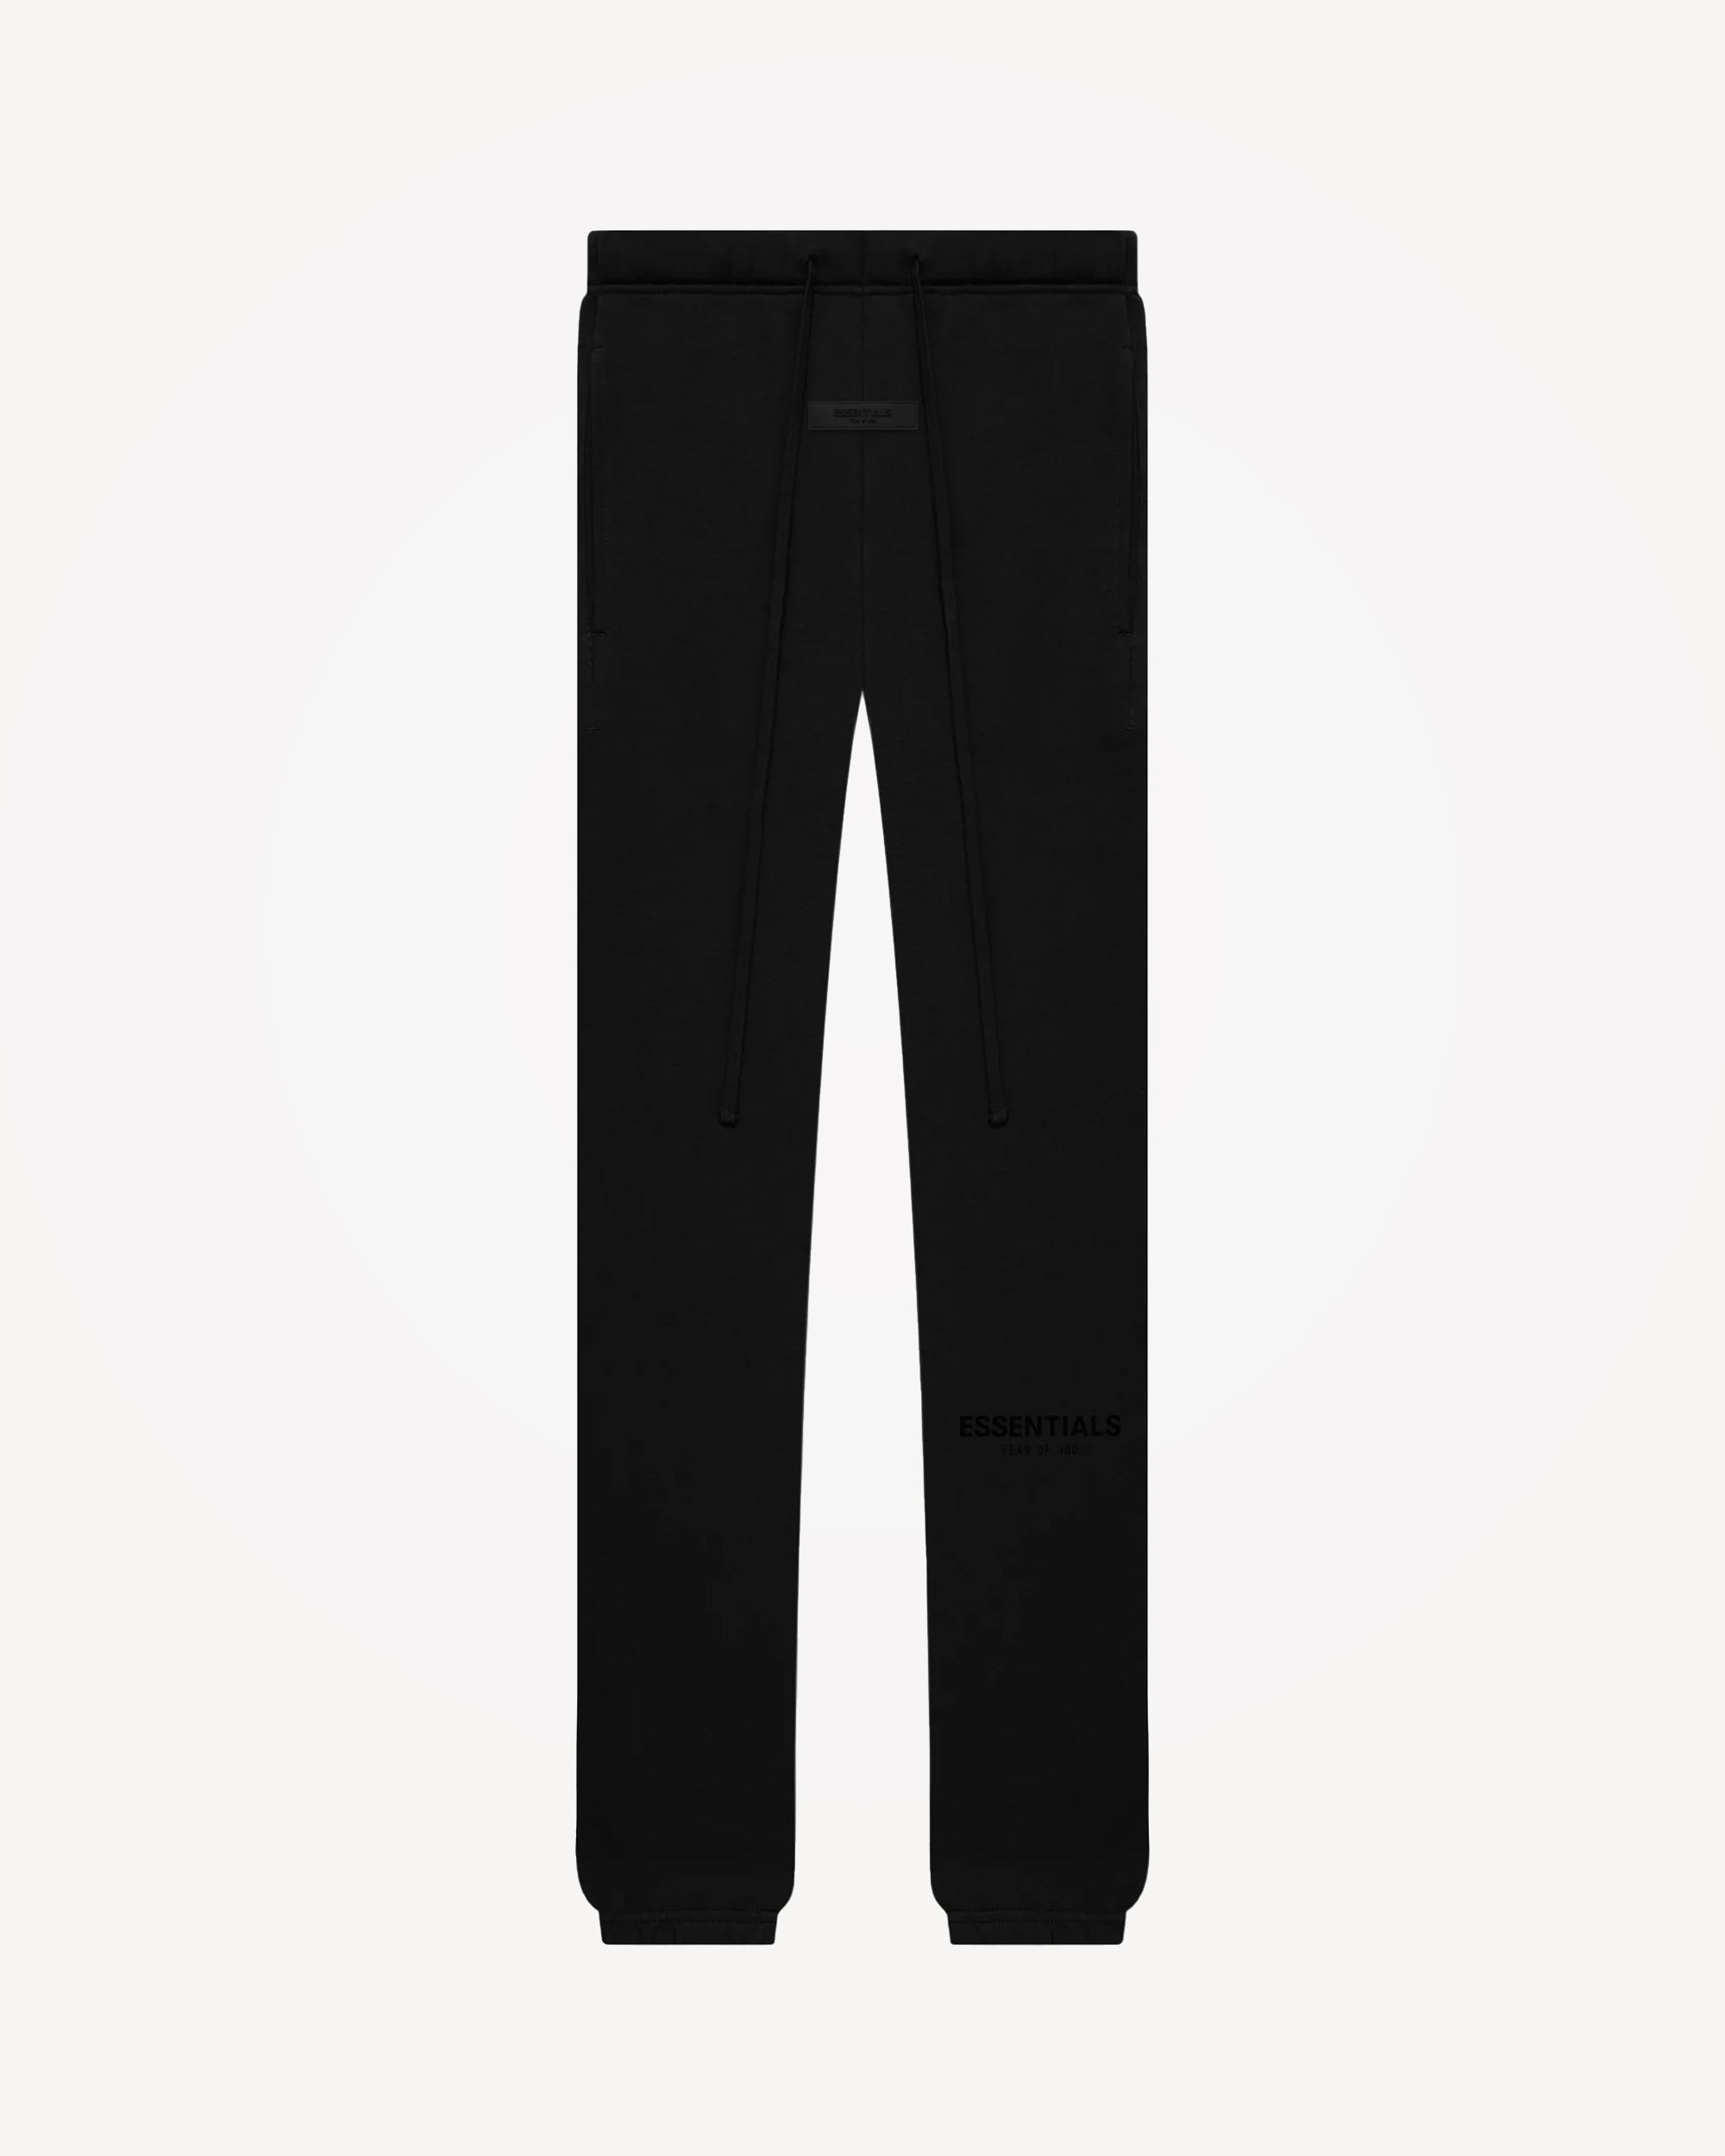 Men's Core Collection Sweatpant in Black